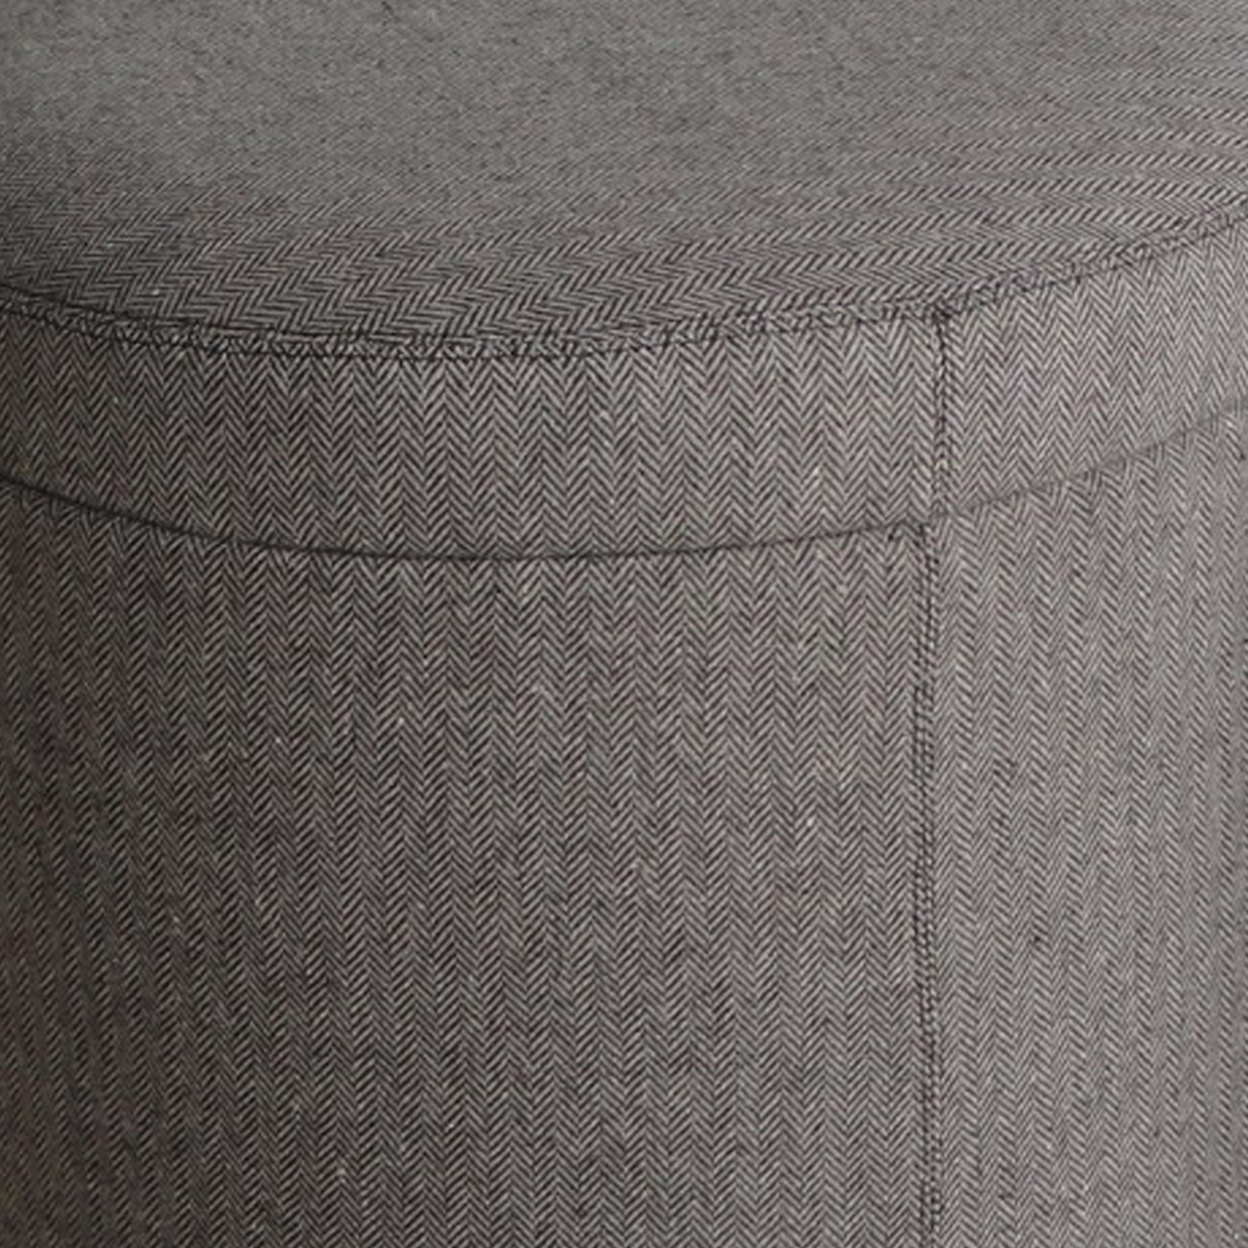 Round Storage Ottoman With Textured Fabric Upholstery, Gray- Saltoro Sherpi